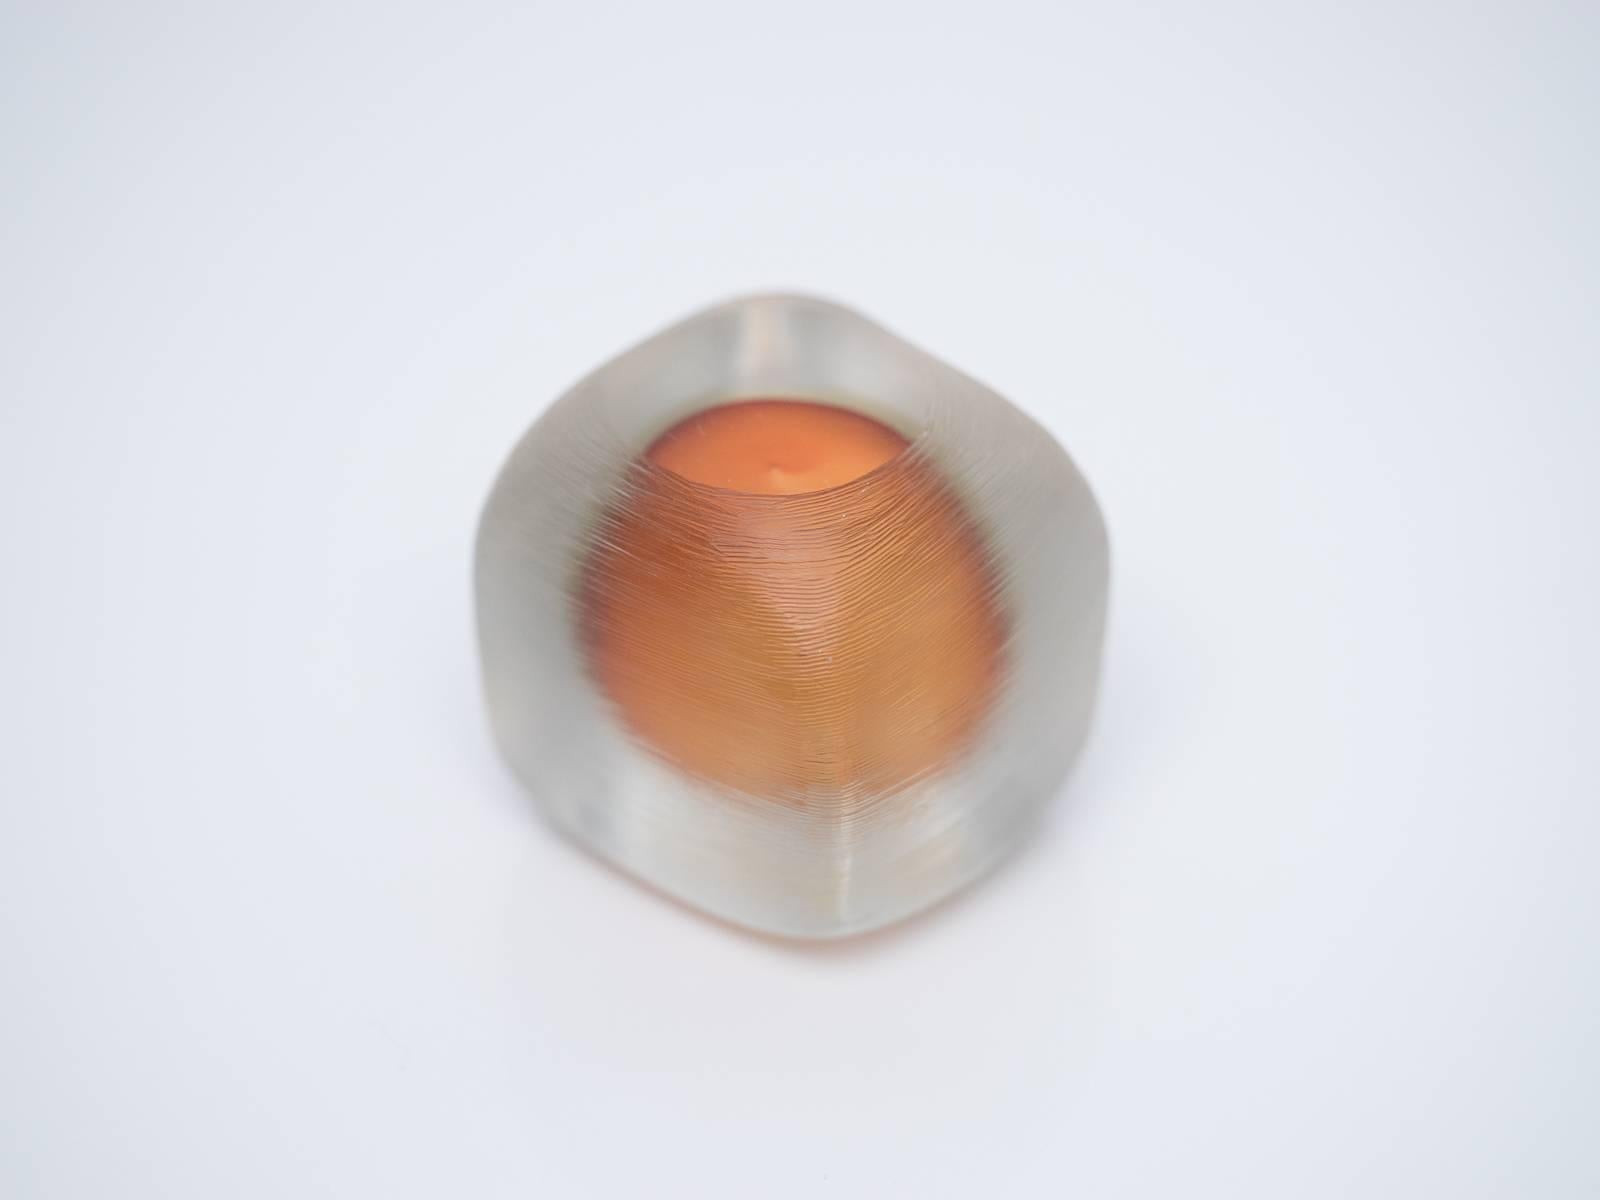 Italian Venini Vetro Sommerso Incised Murano Glass Paperweight with Orange Core, 1968